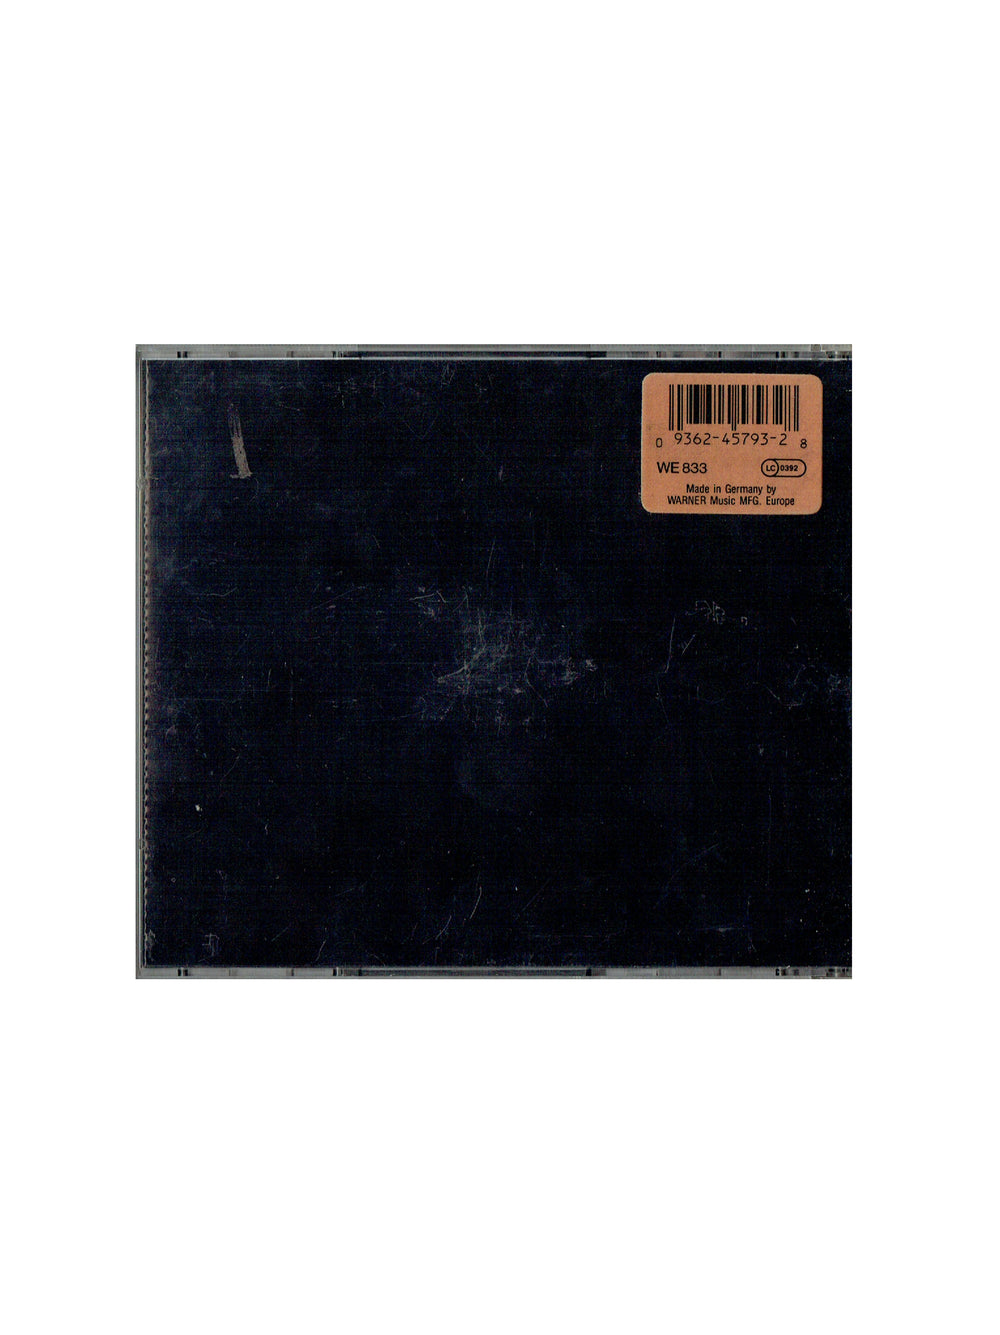 Prince – The Black Album Original 1994 CD Album 8 Tracks Jewel Case Stickers